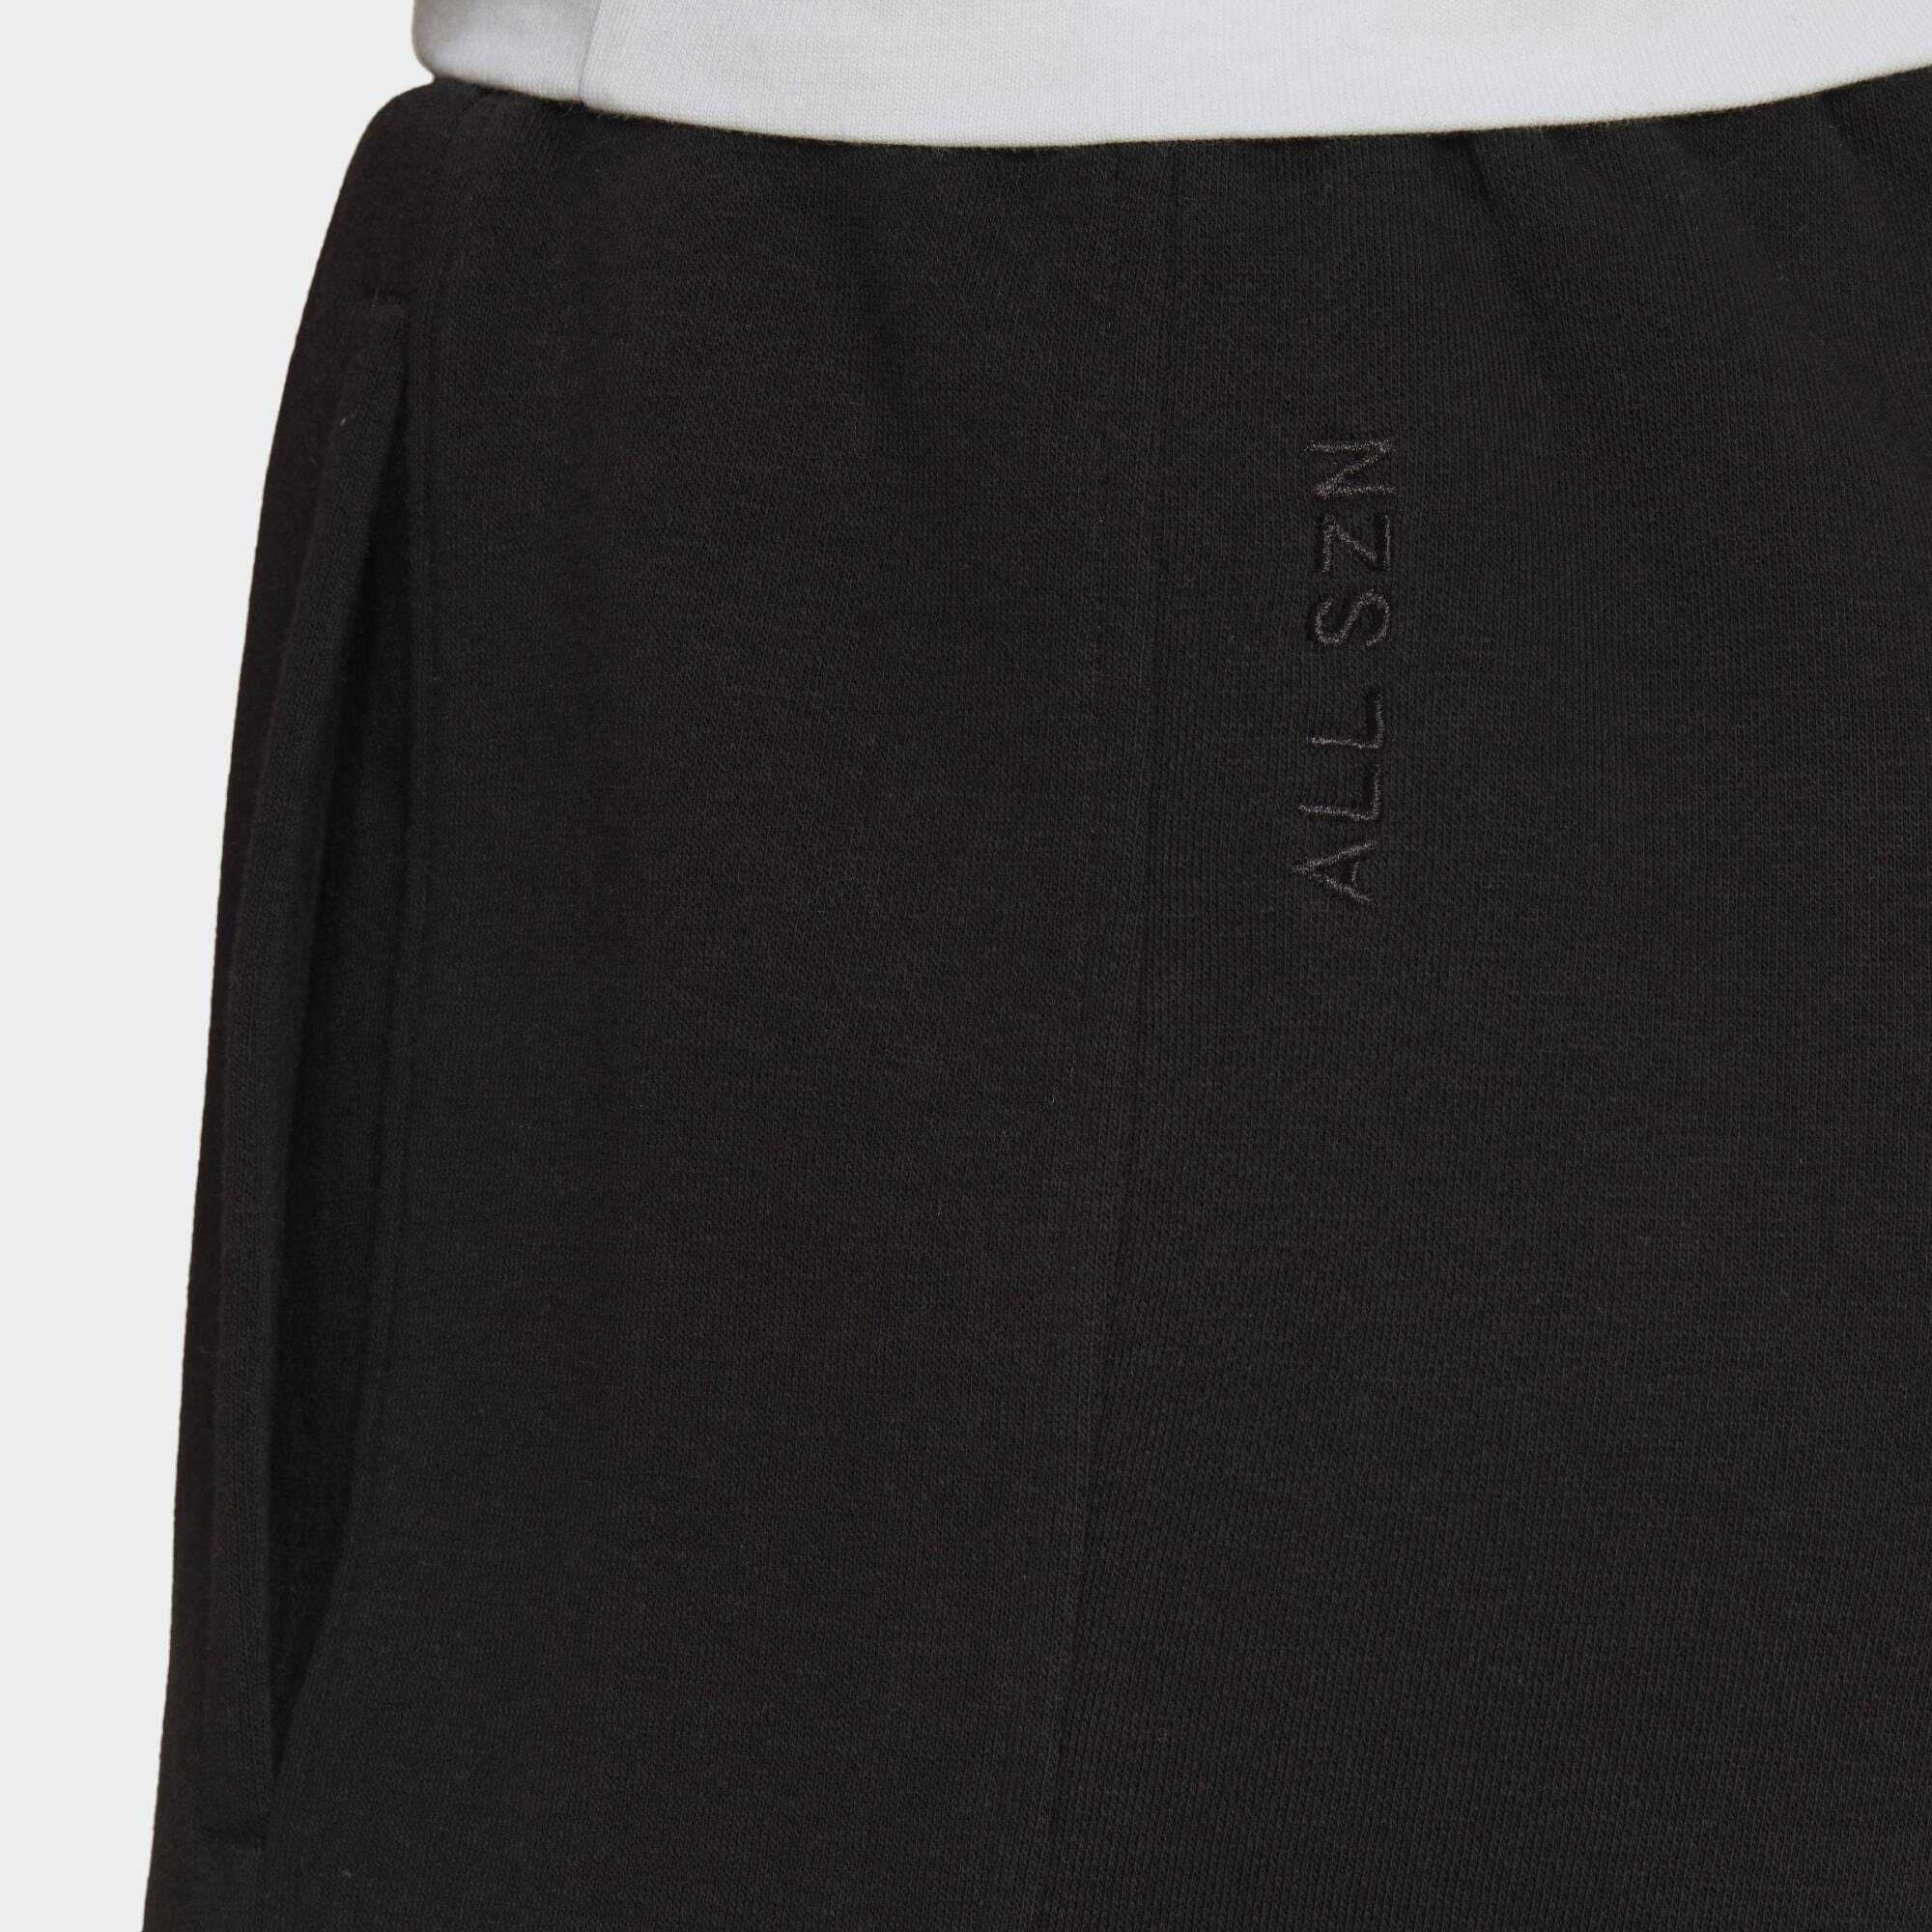 FLEECE Sportswear adidas Black SZN ALL SHORTS Shorts